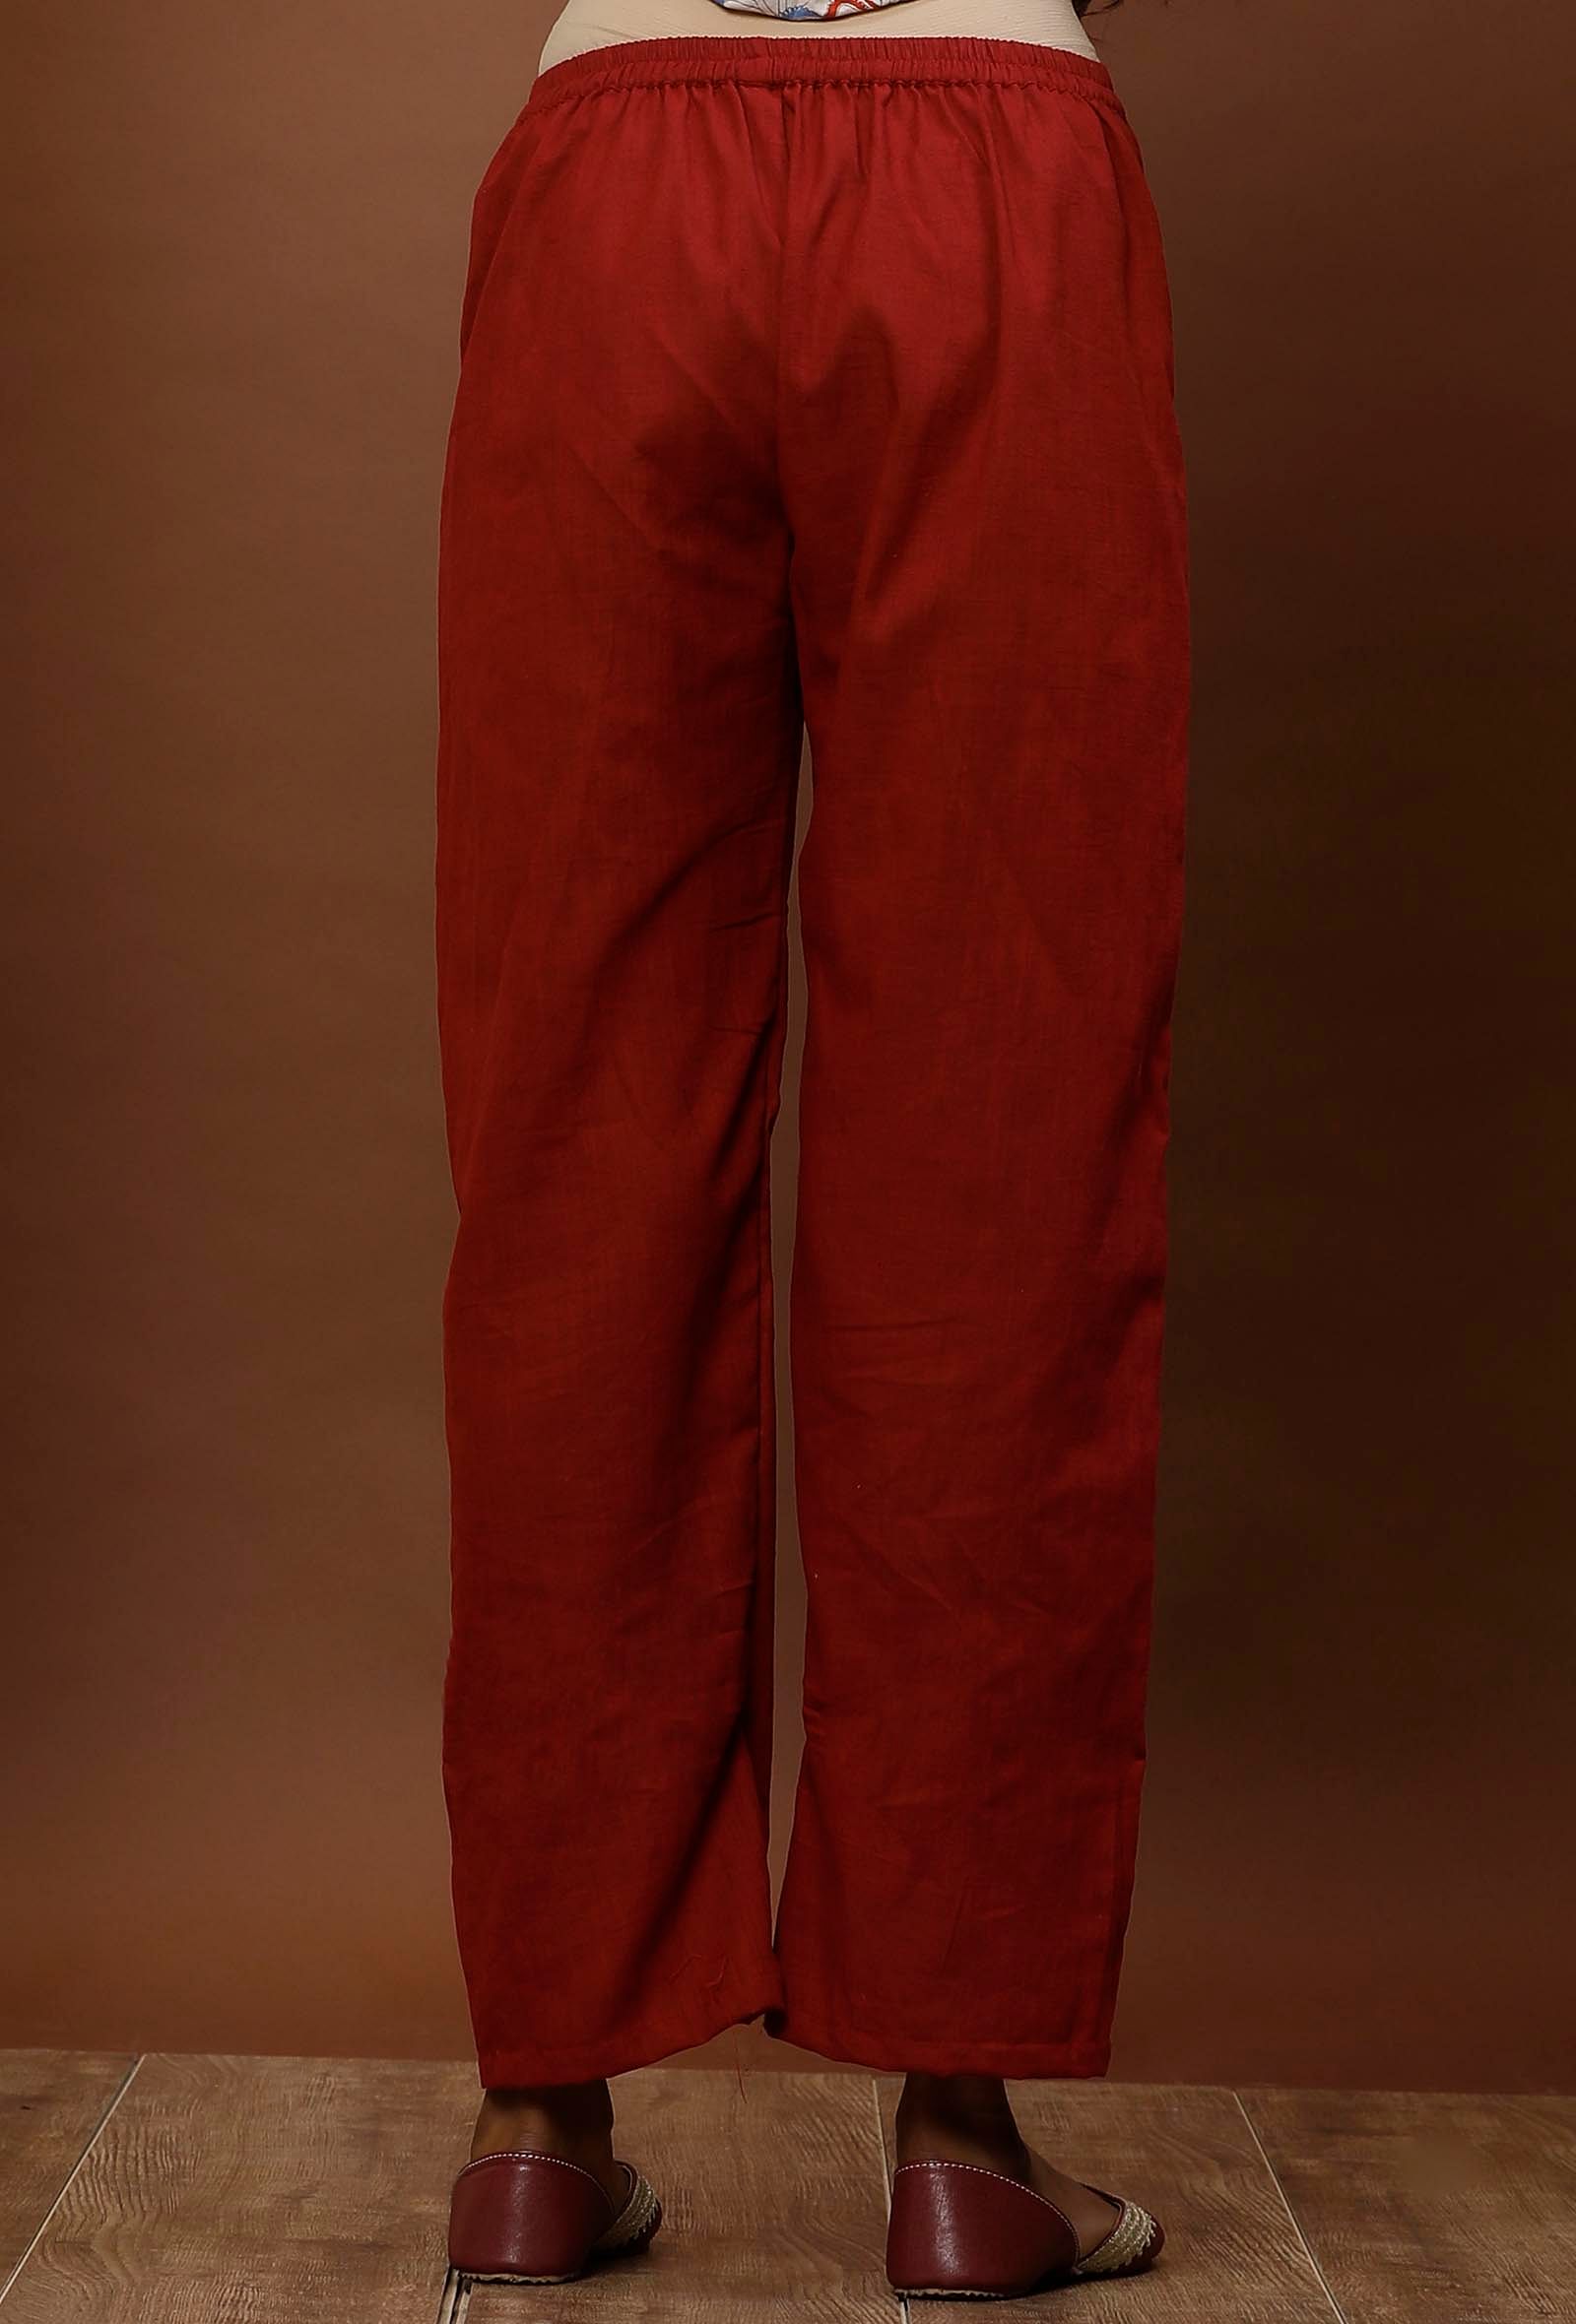 Set of 3: White & Rust Red Kalamkari Cotton Kurta with Red Cotton Straight Pants & Dupatta